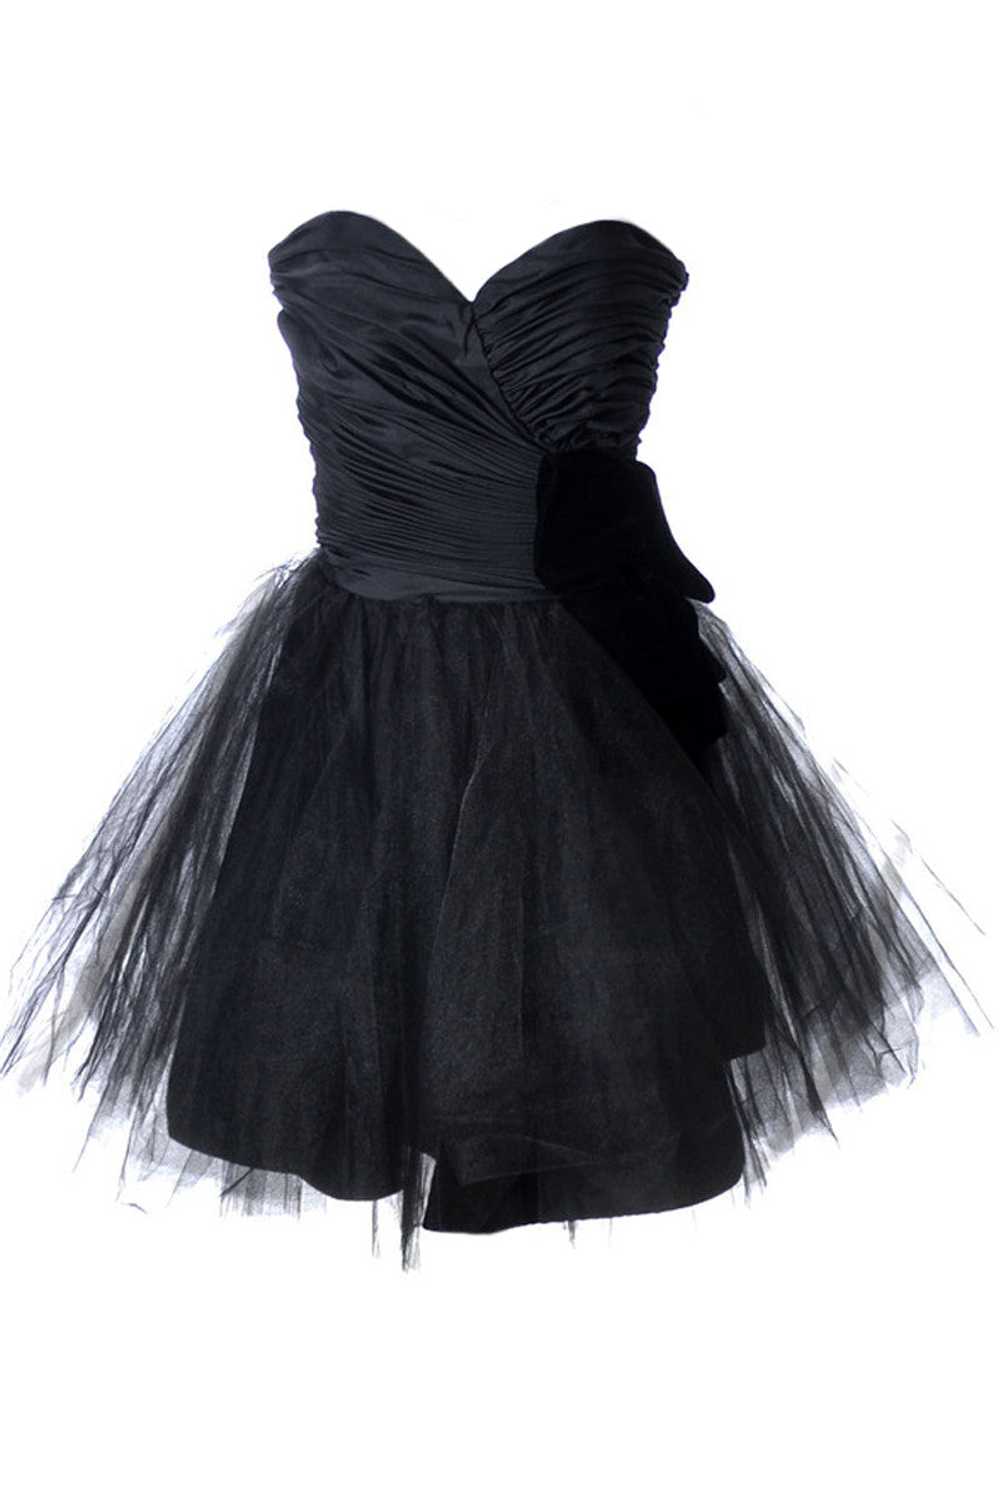 1980's Lillie Rubin Black Strapless Party Dress - image 1